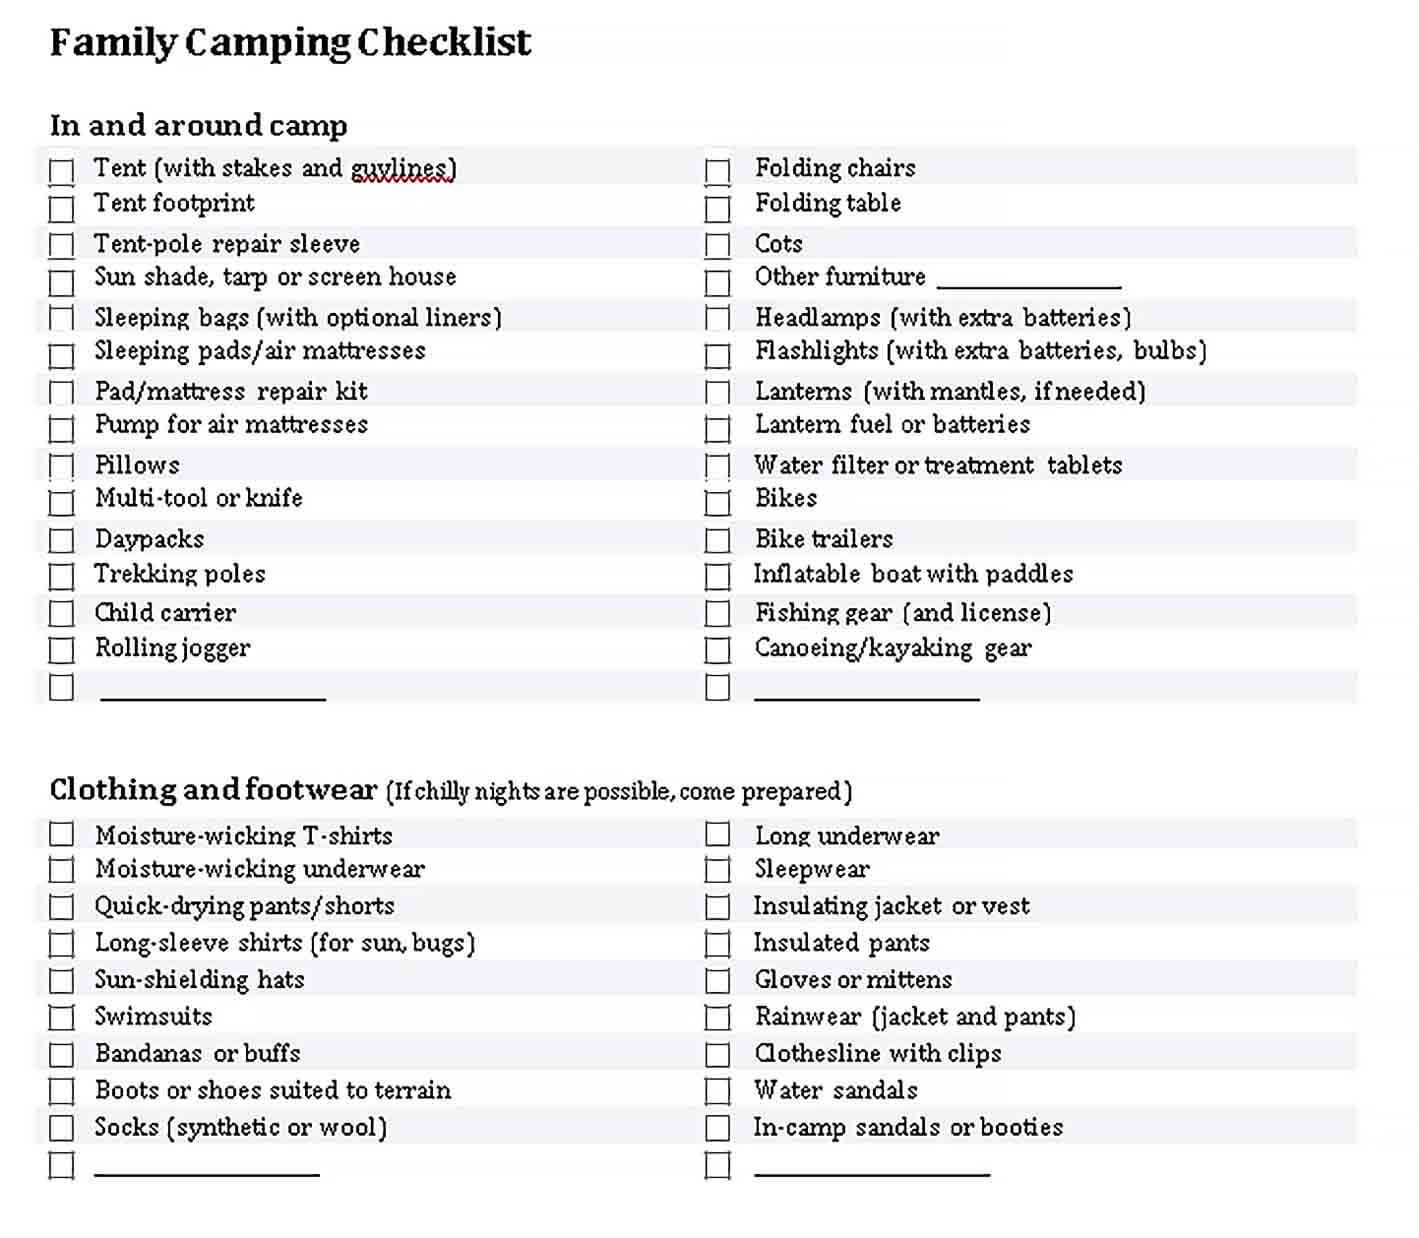 Sample Family Vaction Camping Checklist